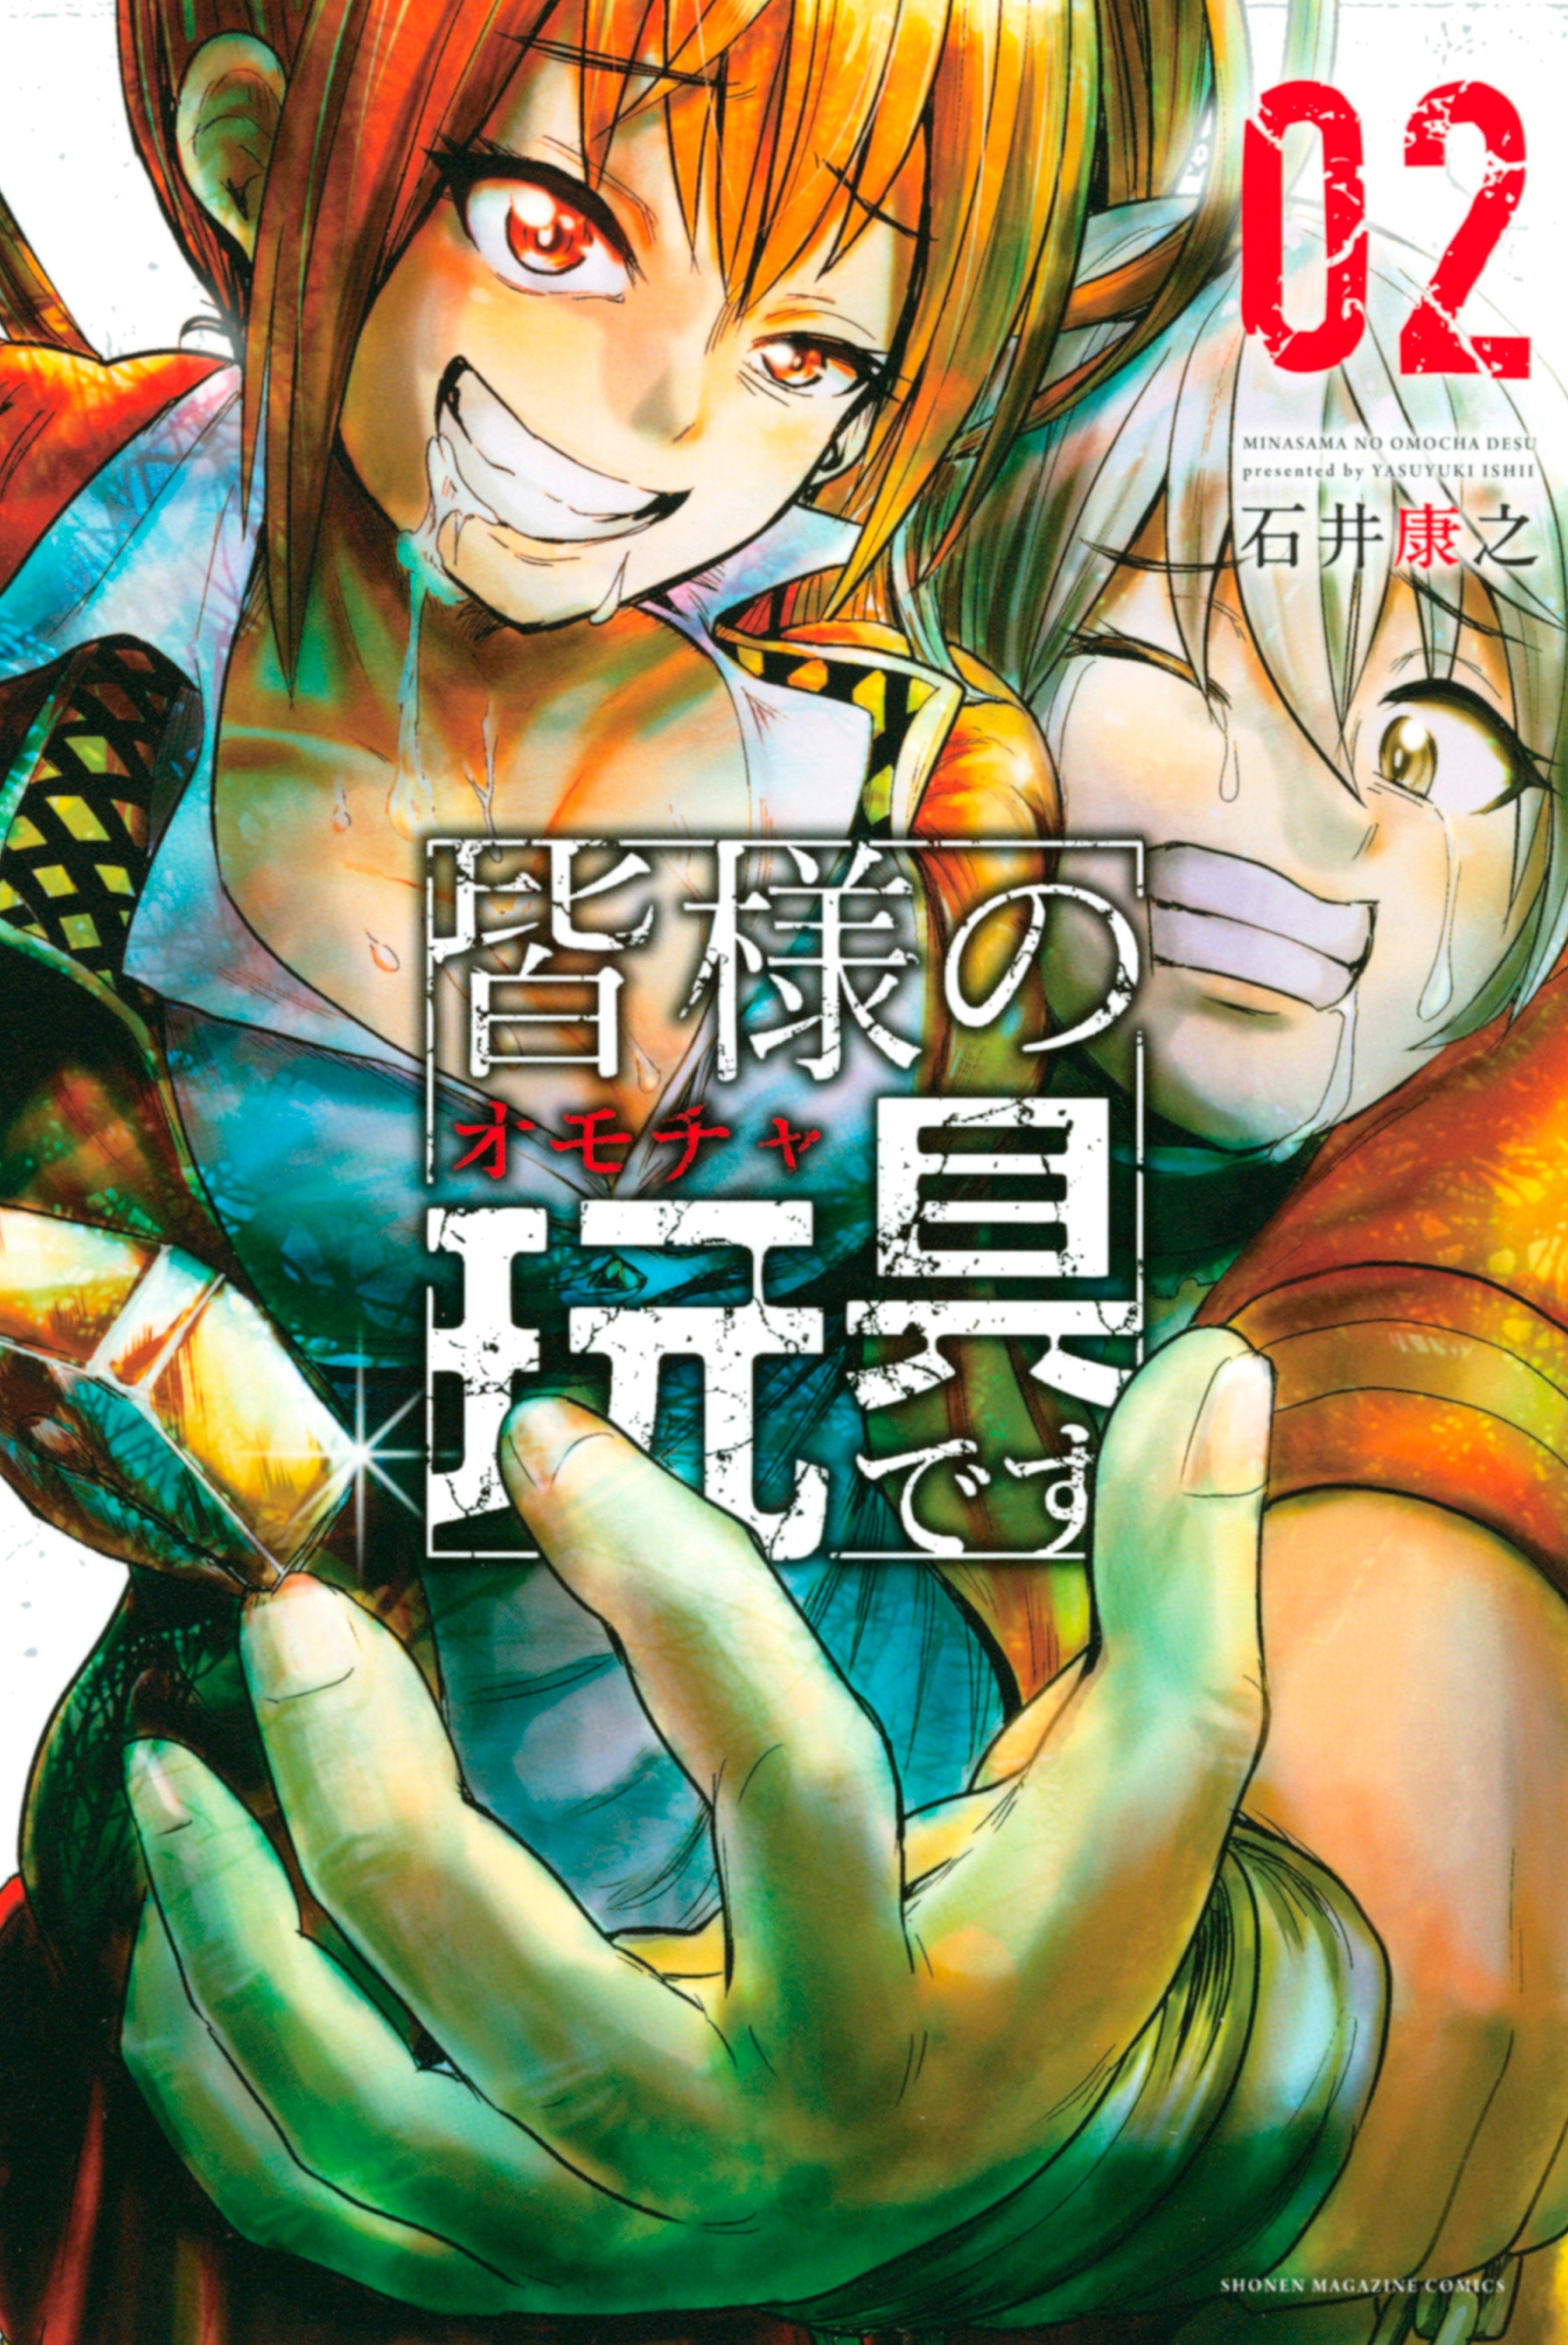 Mina-sama Etes-vous prets? Manga - Read Manga Online Free